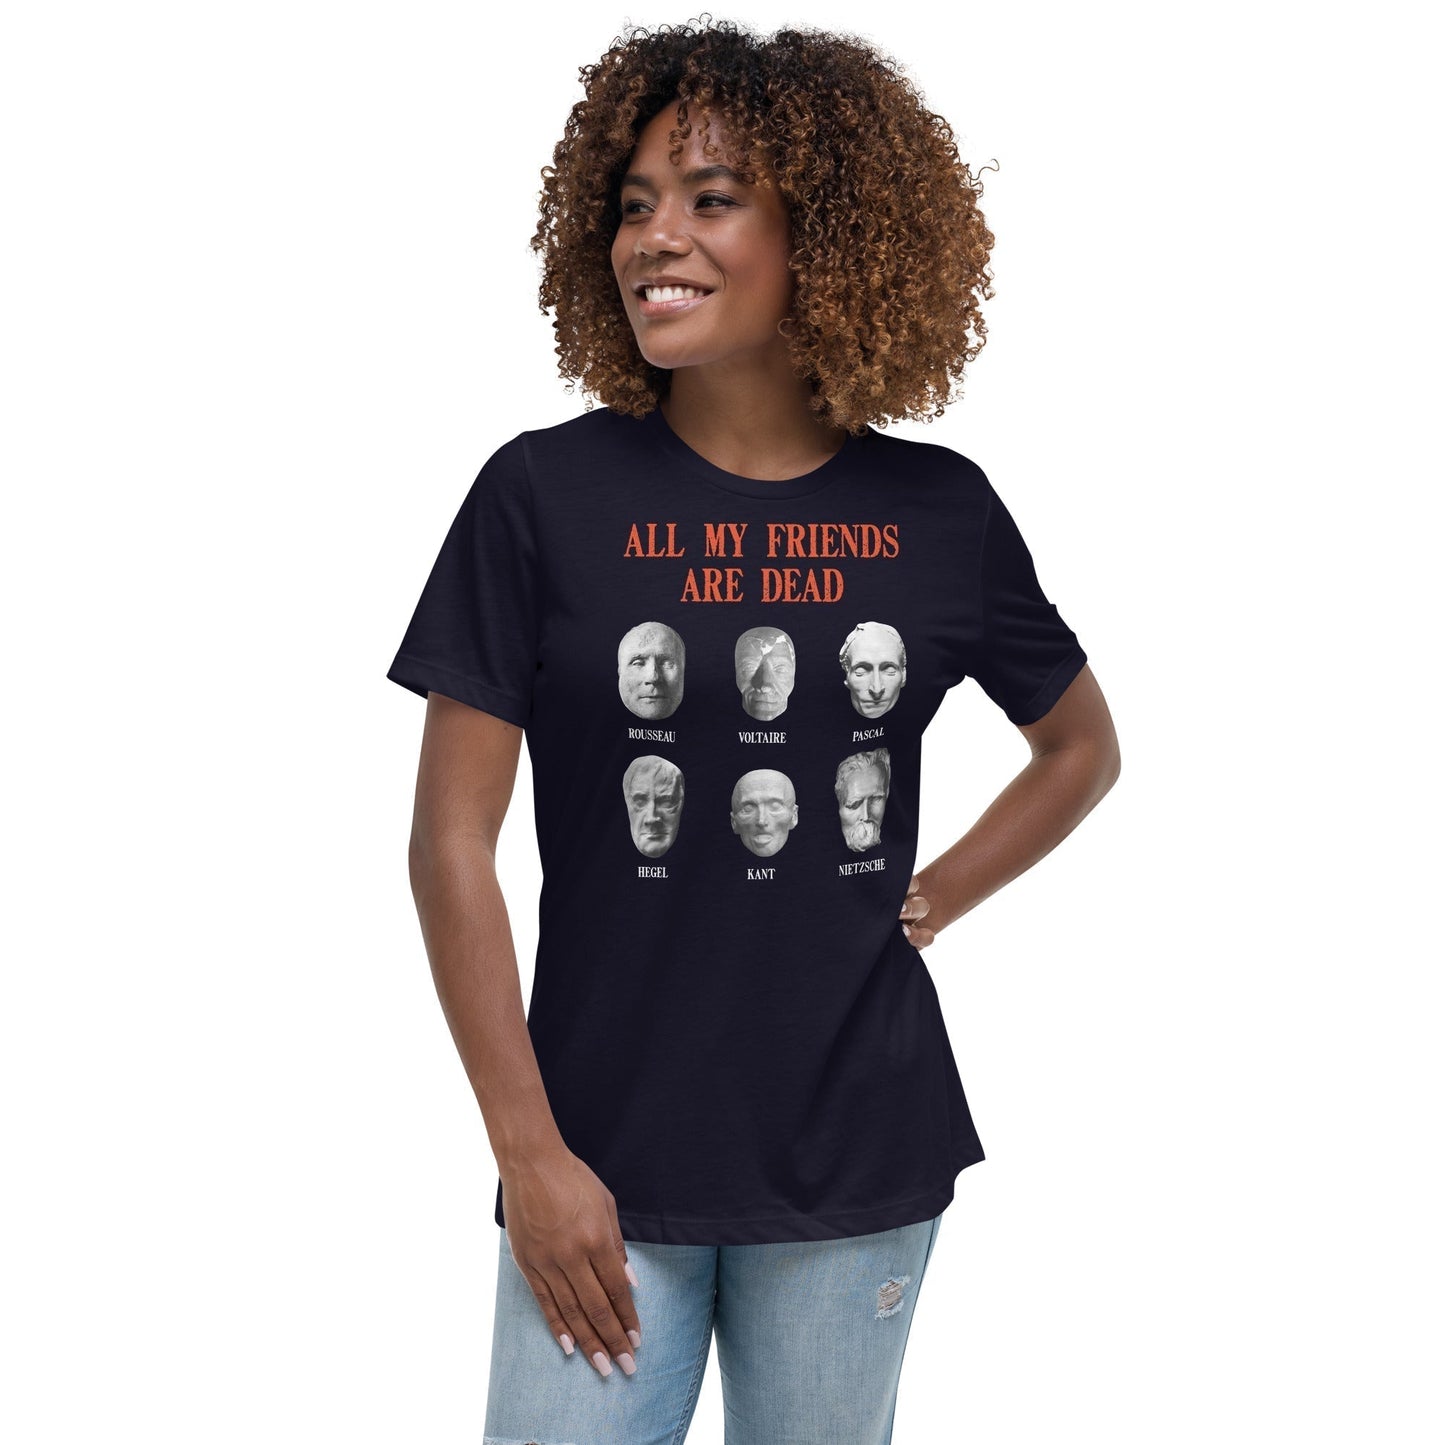 All my friends are dead - Women's T-Shirt